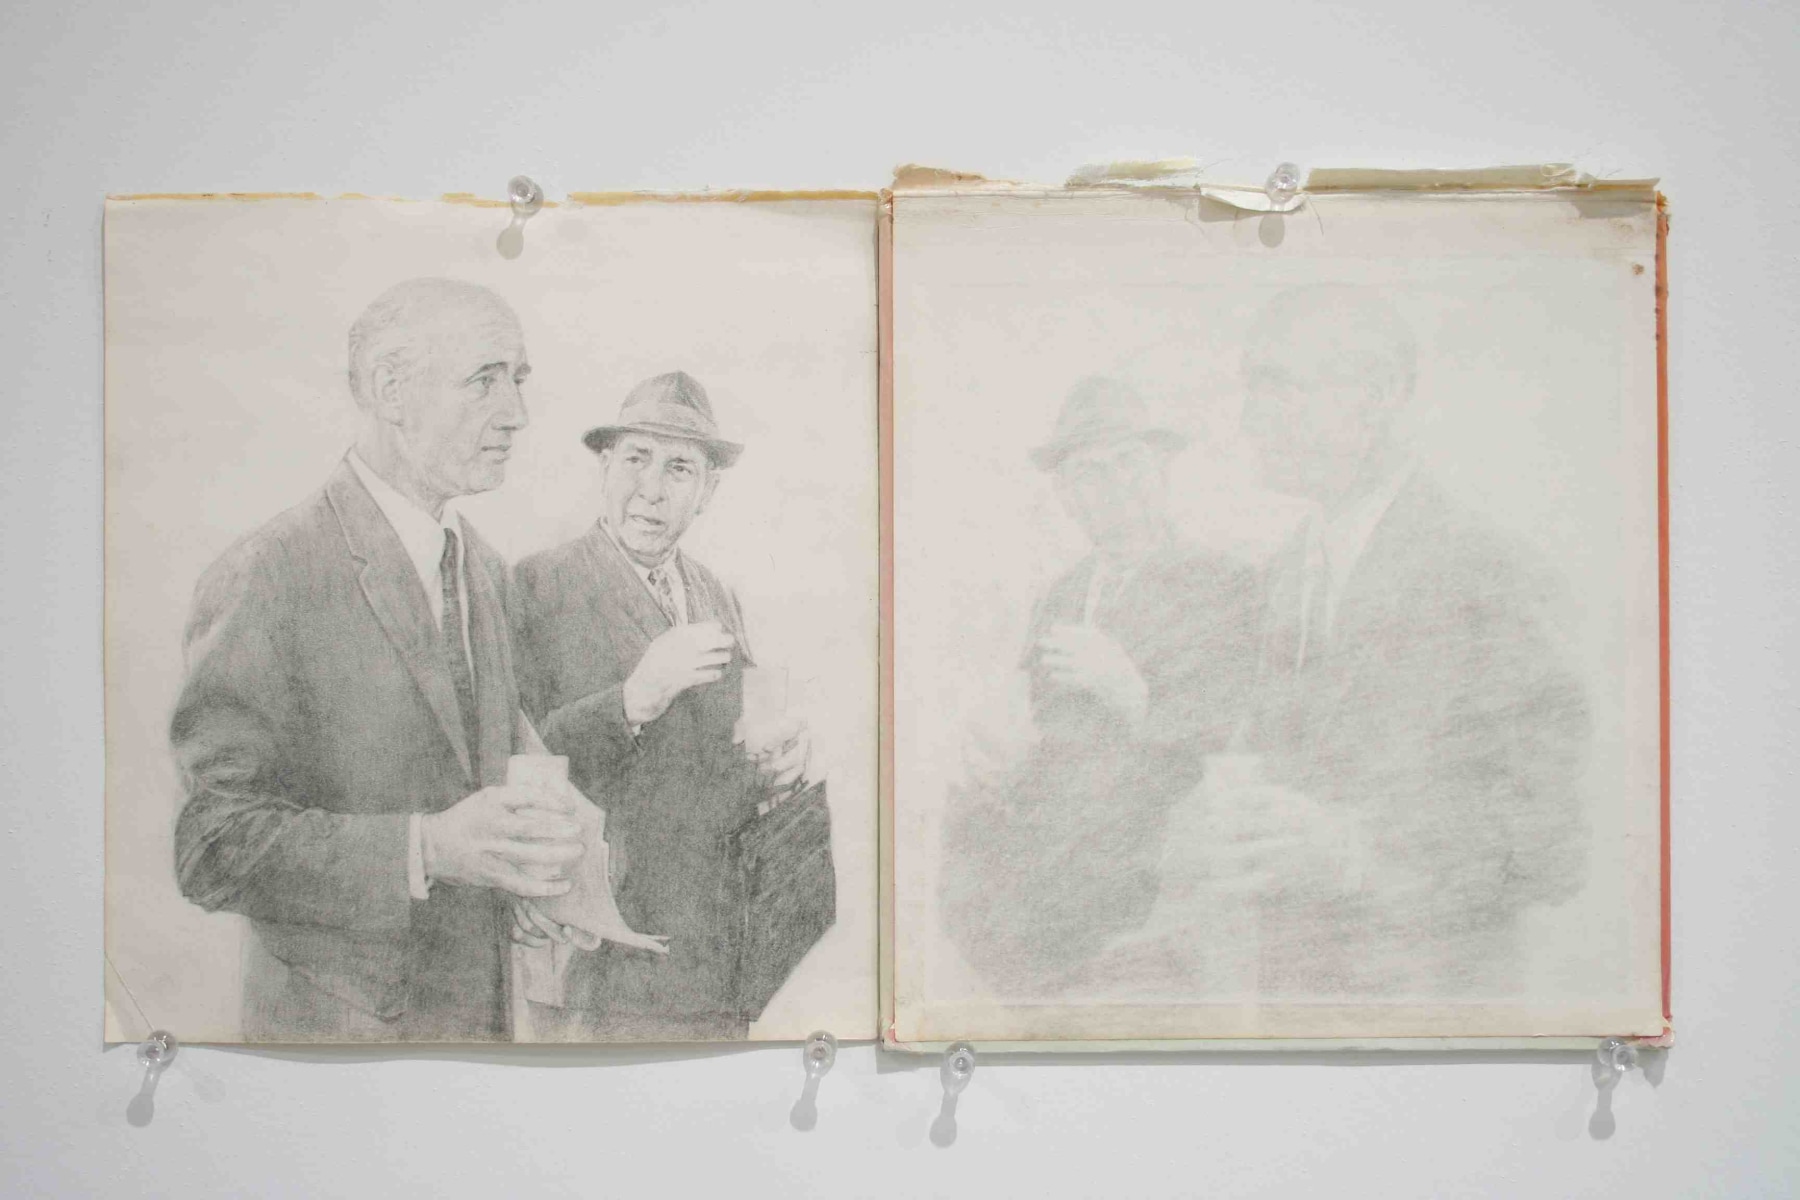 Pencil sketch of two men talking